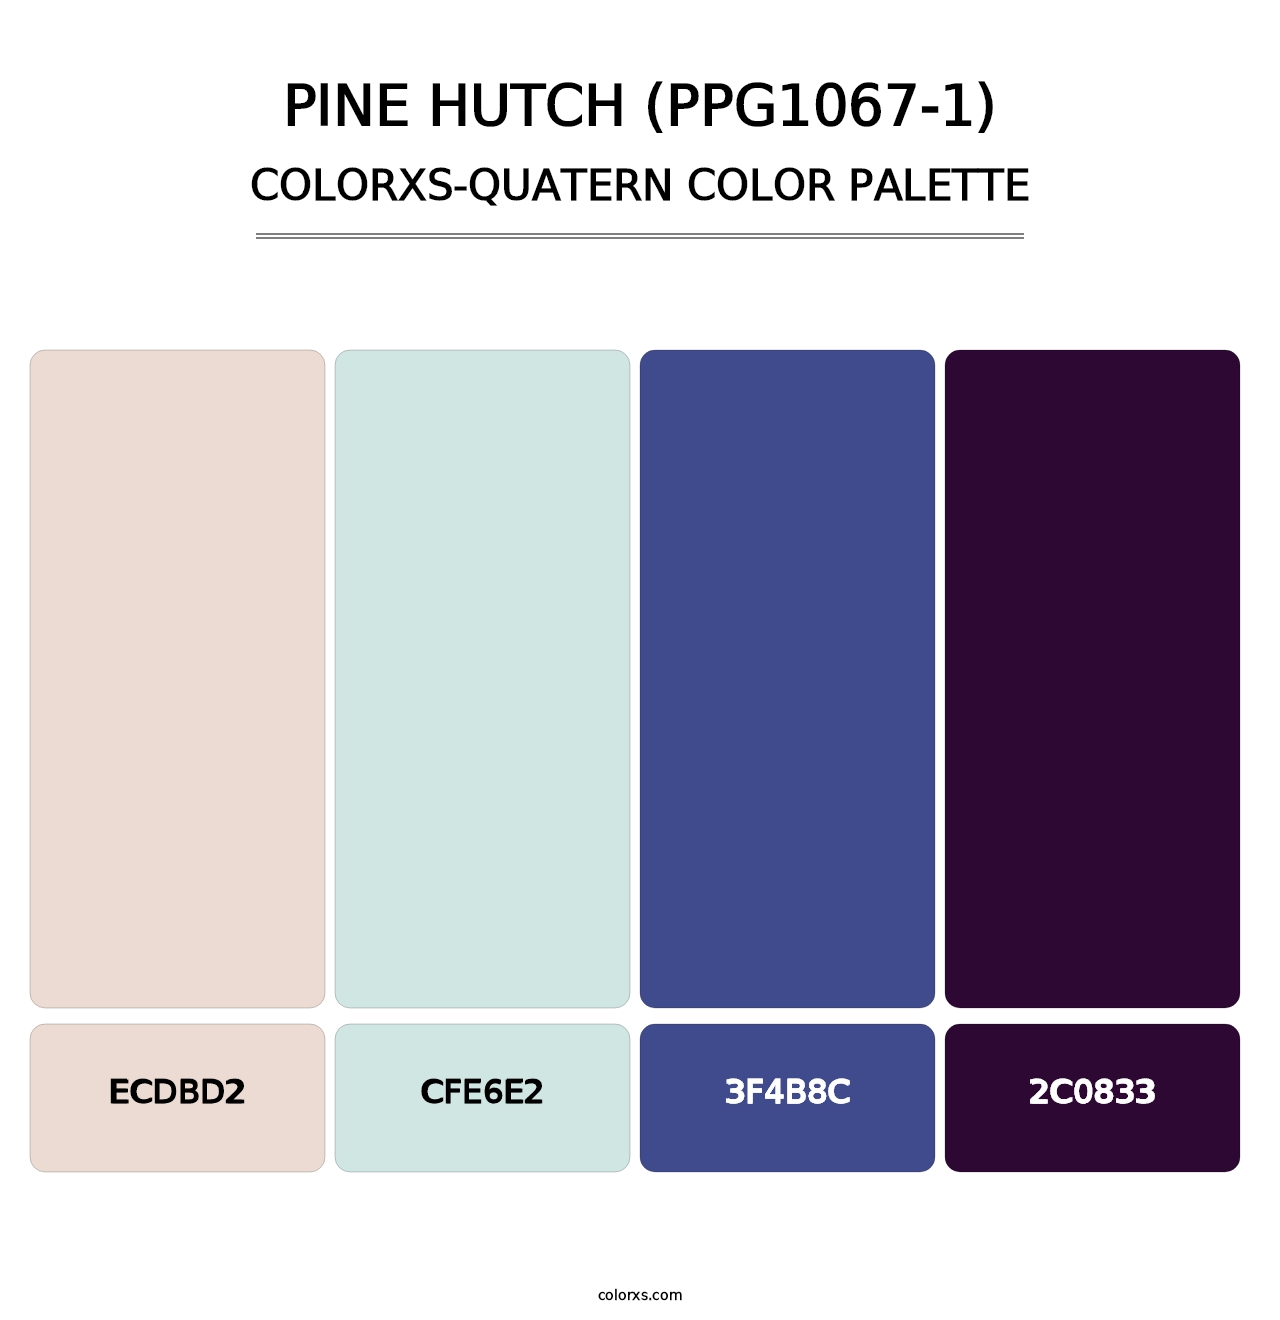 Pine Hutch (PPG1067-1) - Colorxs Quatern Palette